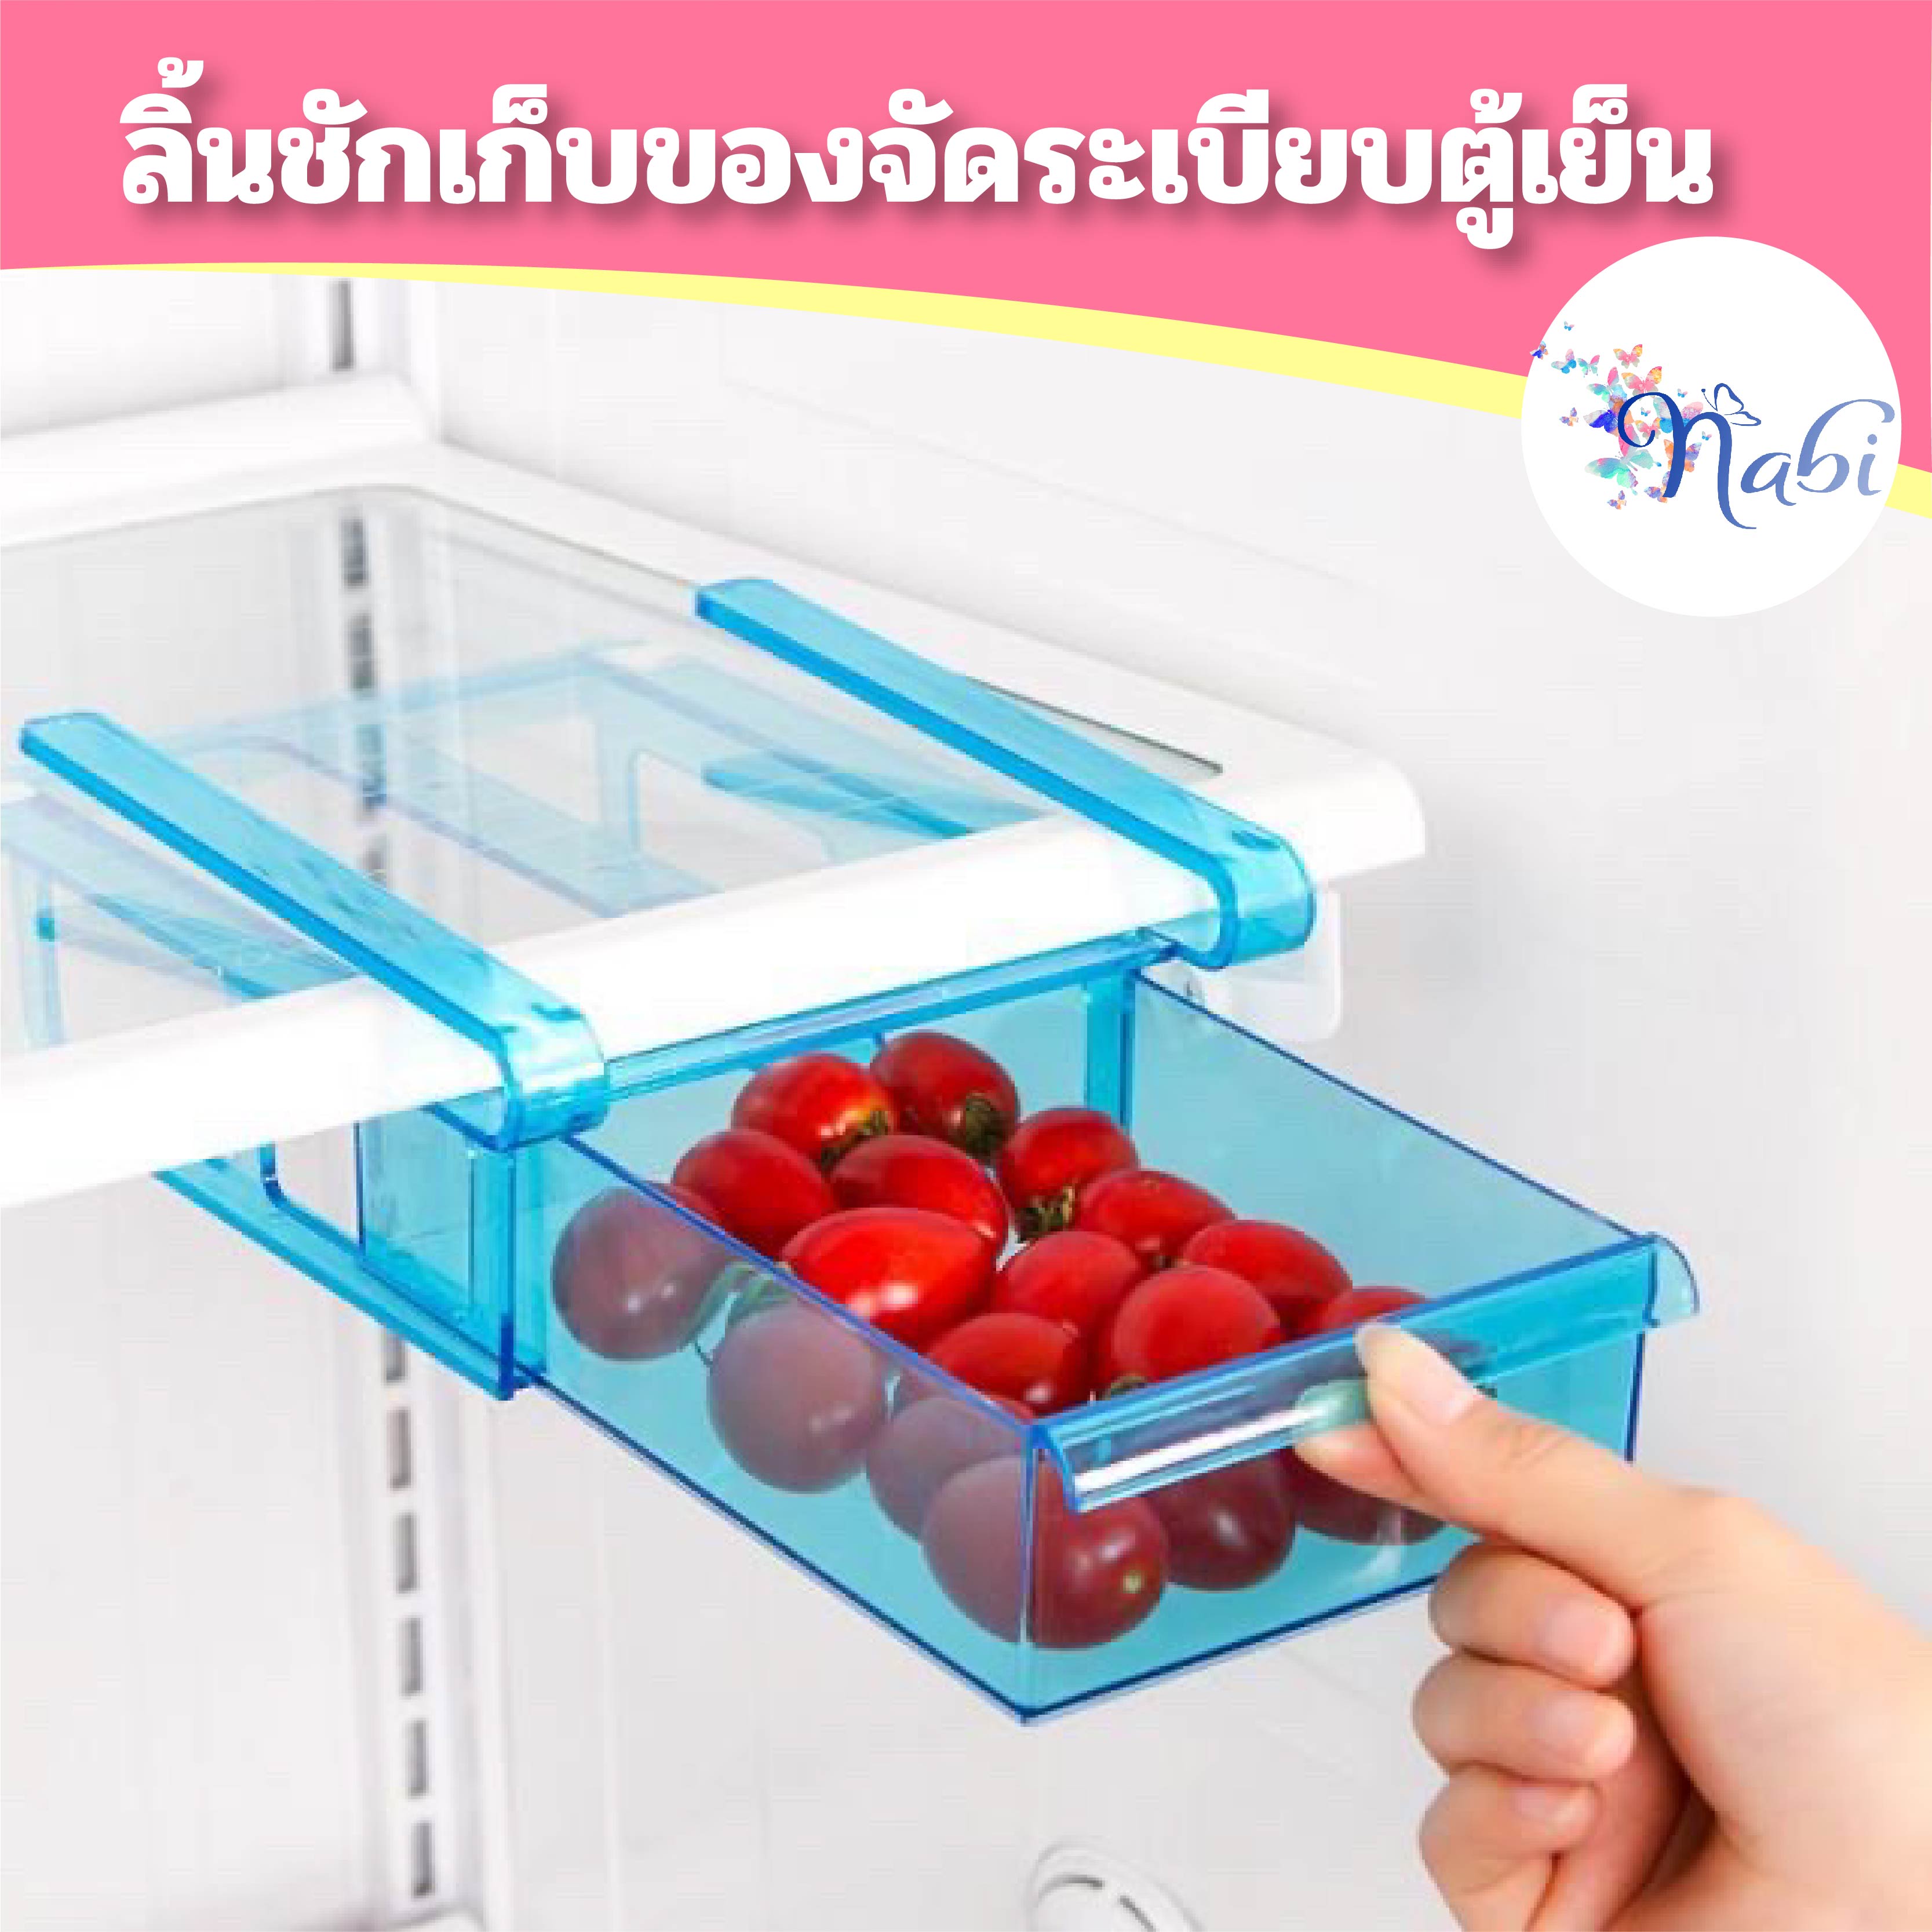 Nabi Intelligent storage drawers ลิ้นชักตู้เย็น แบบใส ชั้นวางของในตู้เย็น กล่องใส่ของในตู้เย็น วัสดุอคริลิกเกรดA ทนทาน สินค้าคุณภาพนำเข้าจากญี่ปุ่น